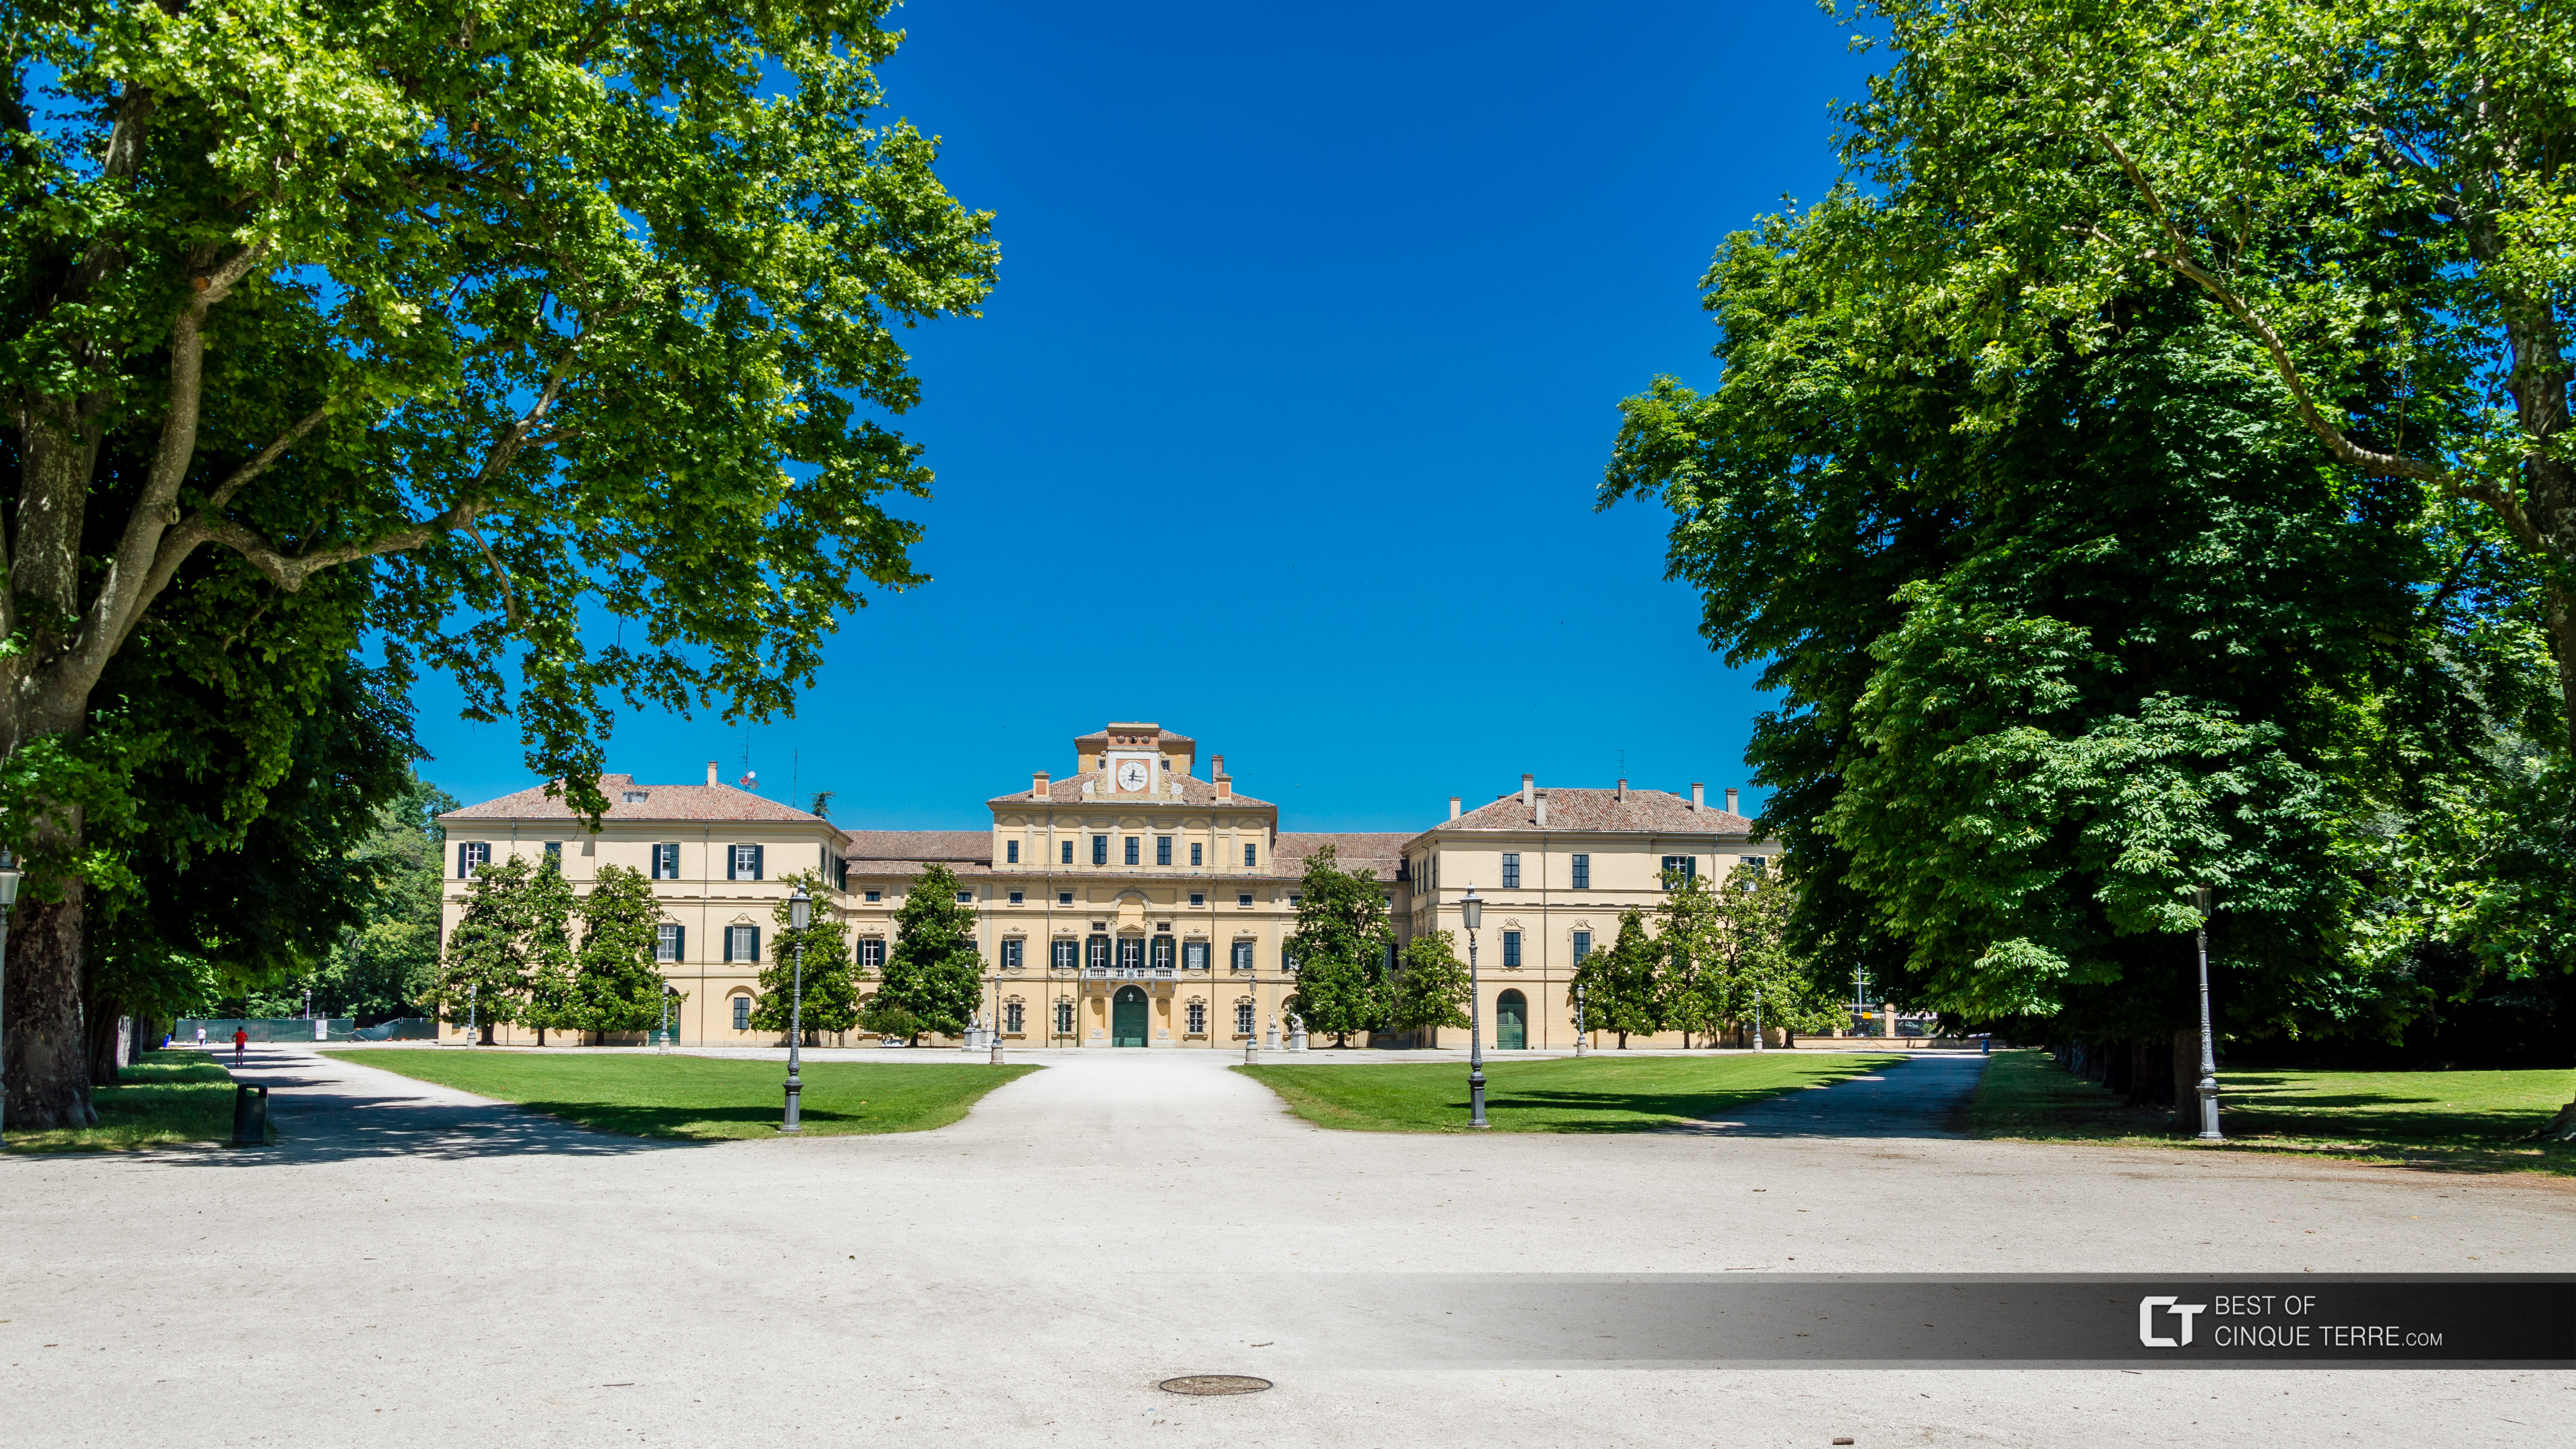 Palácio Ducal dentro do Parque Ducal, Parma, Itália